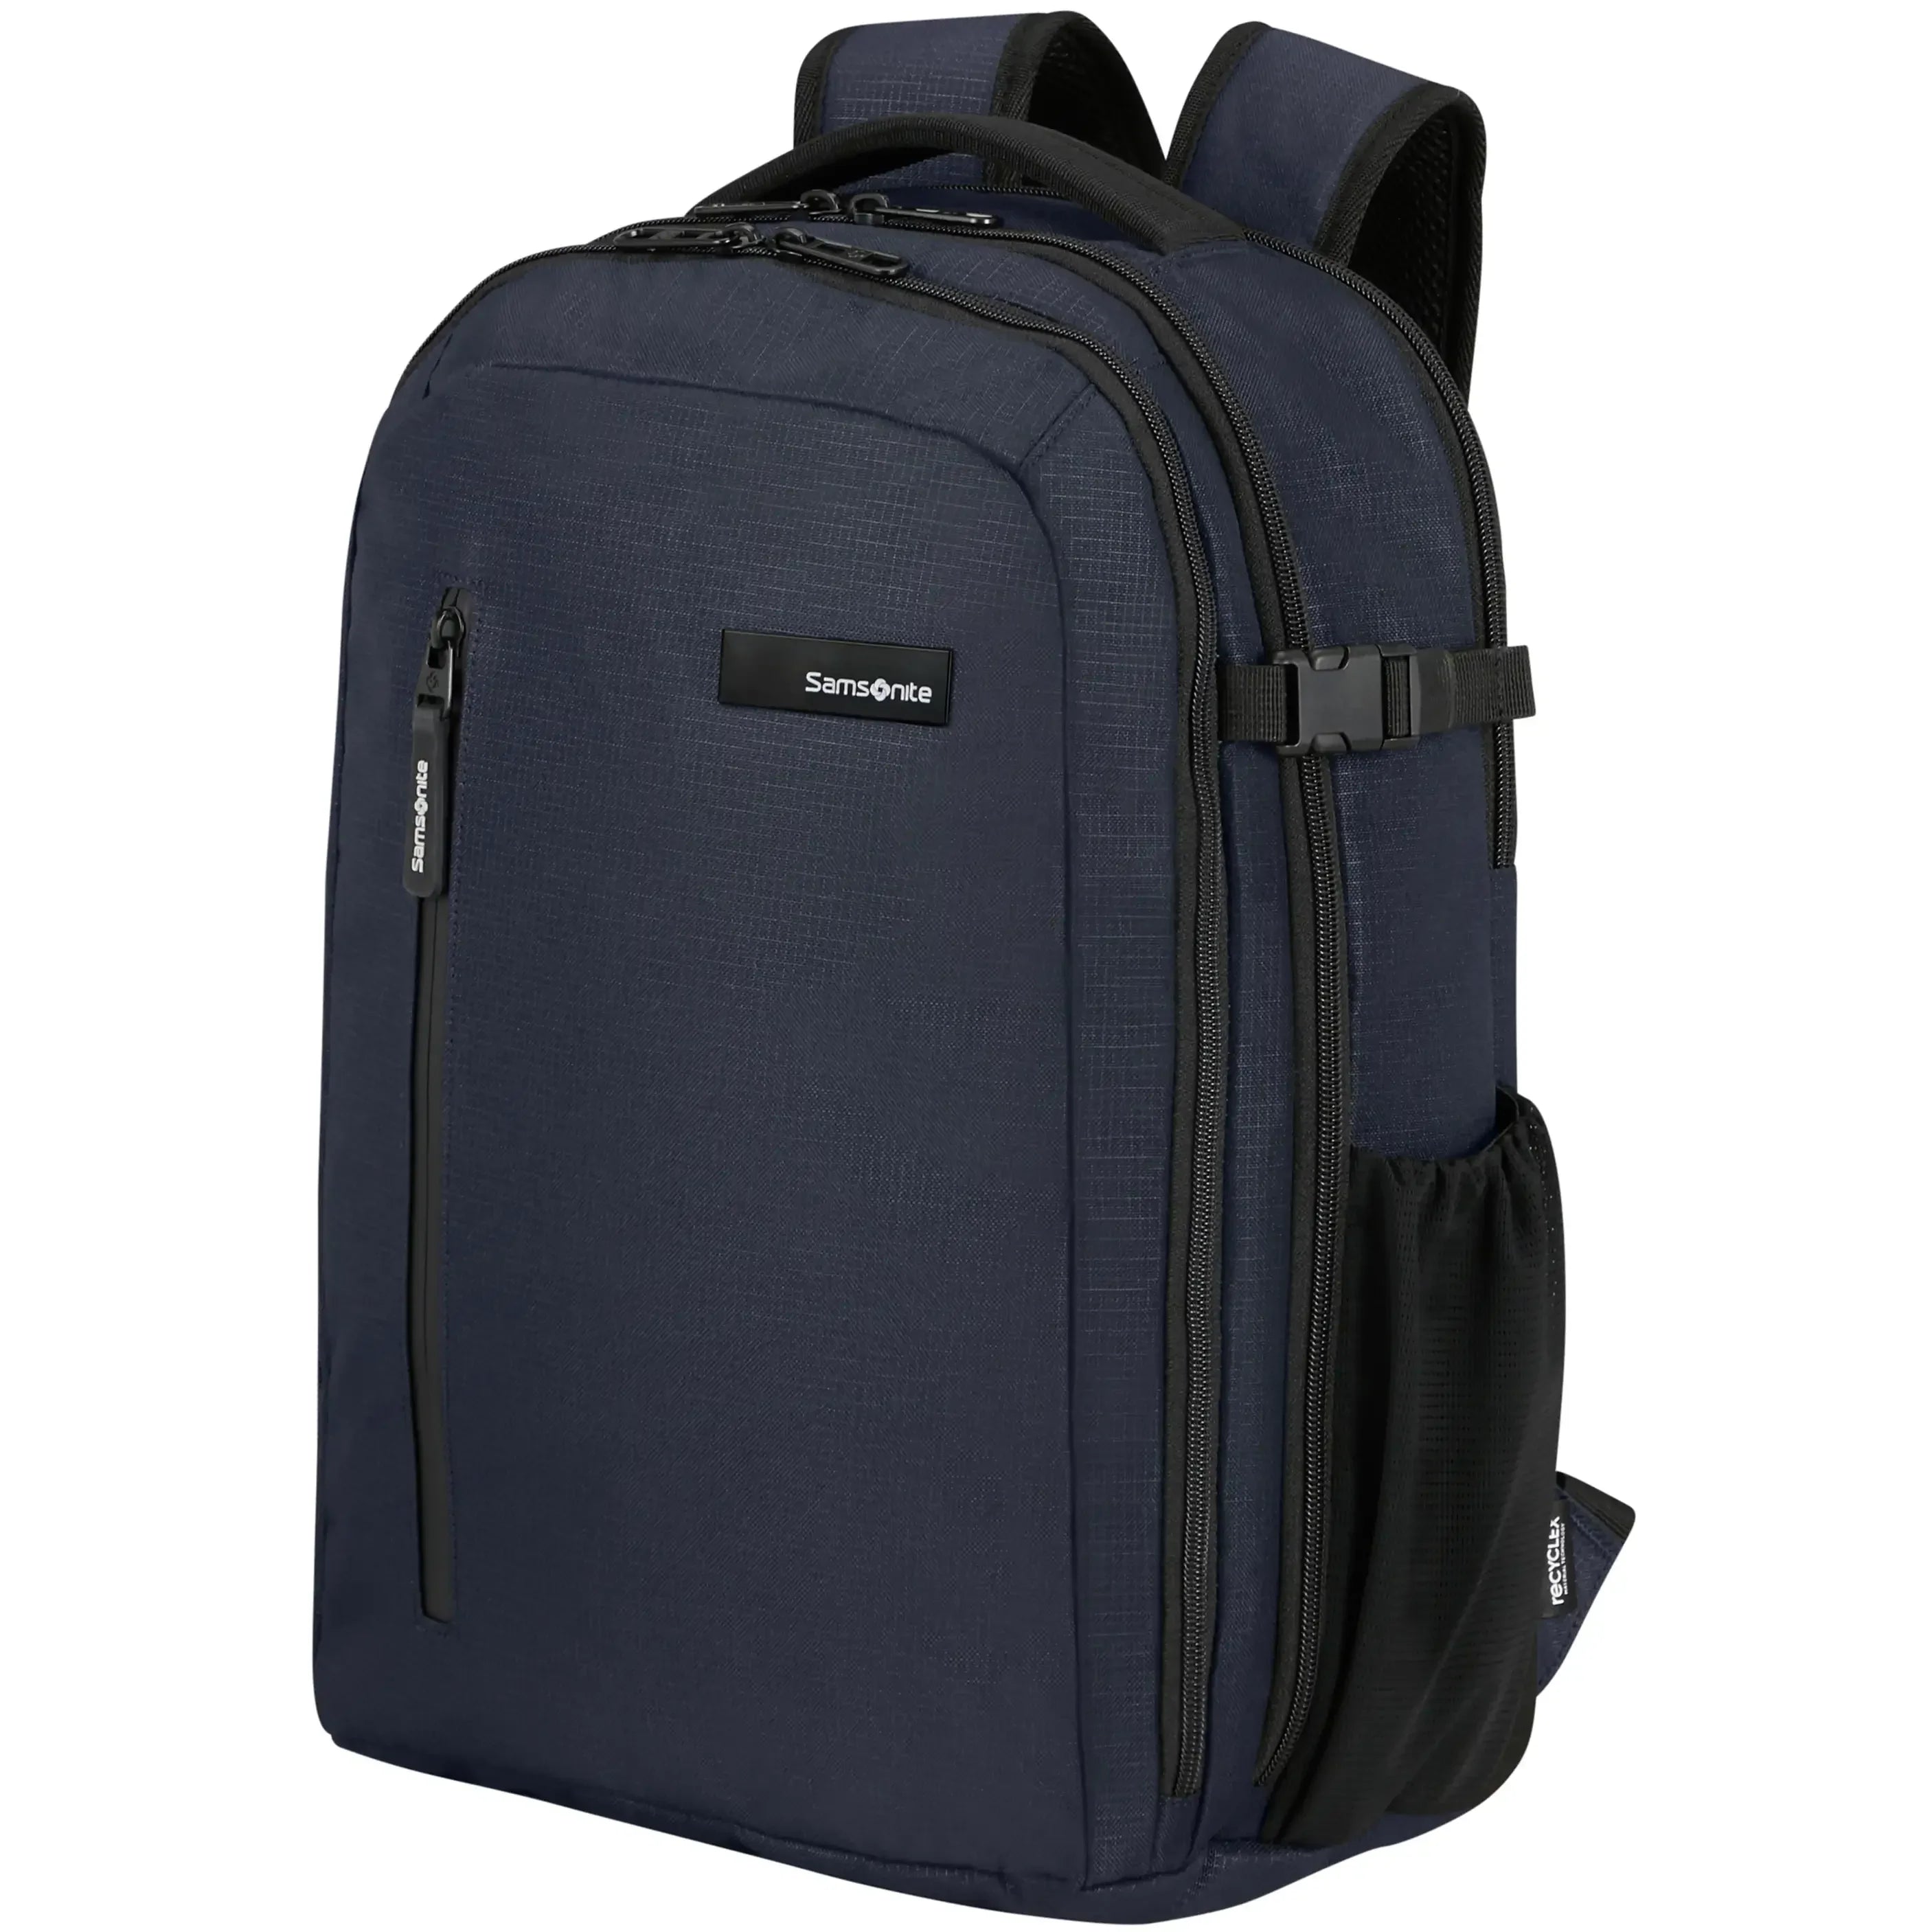 Samsonite Roader Laptop Backpack M 44 cm - dark blue